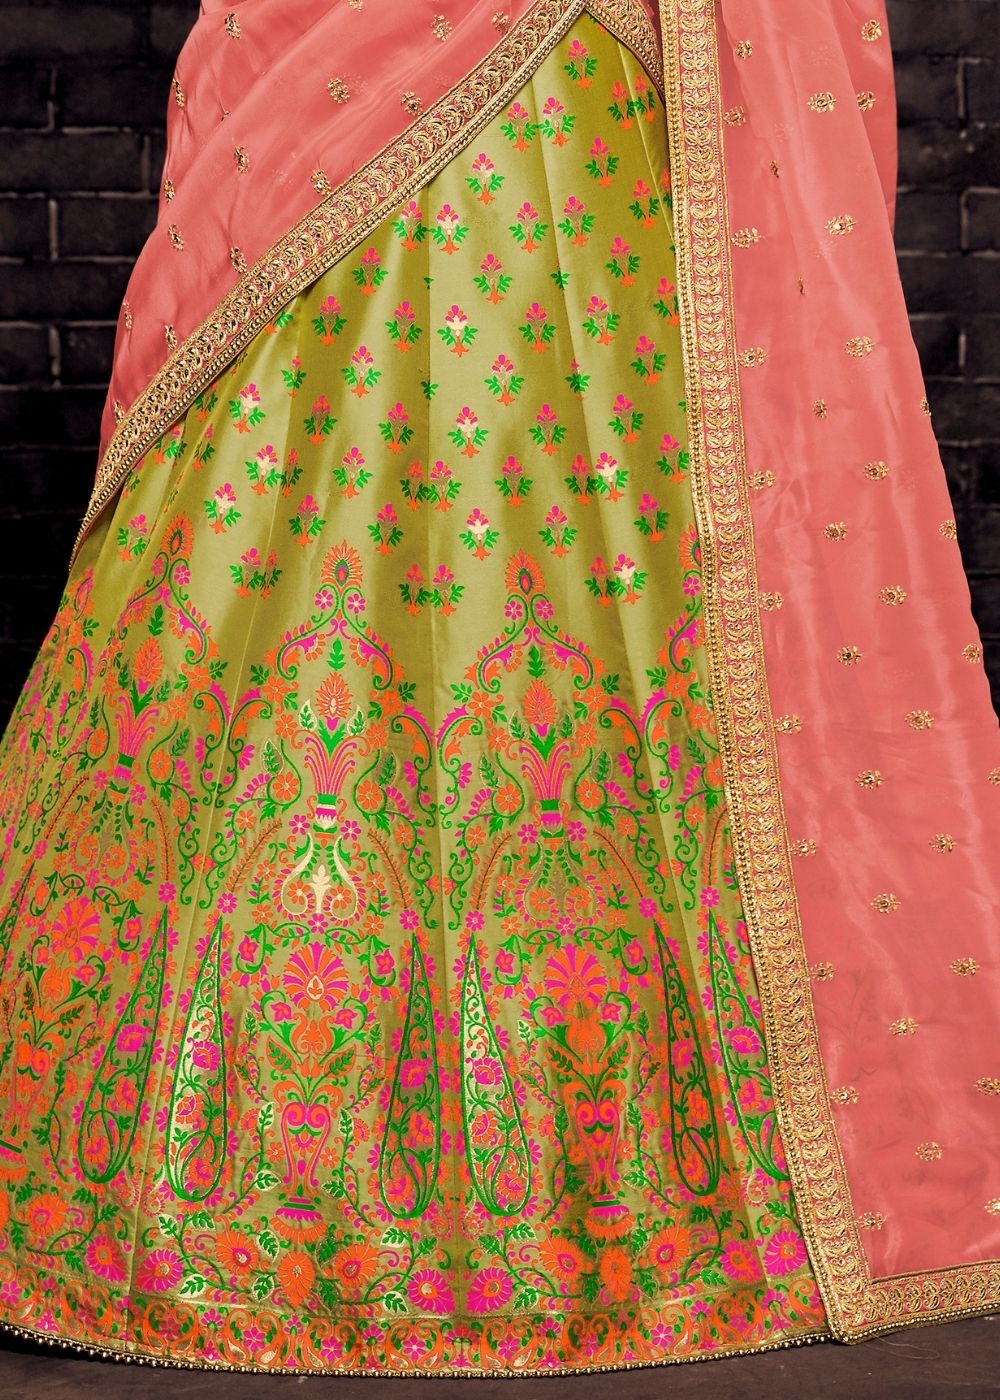 Geetha Madhuri in parrot green lehenga with heavy blouse | Fashionworldhub